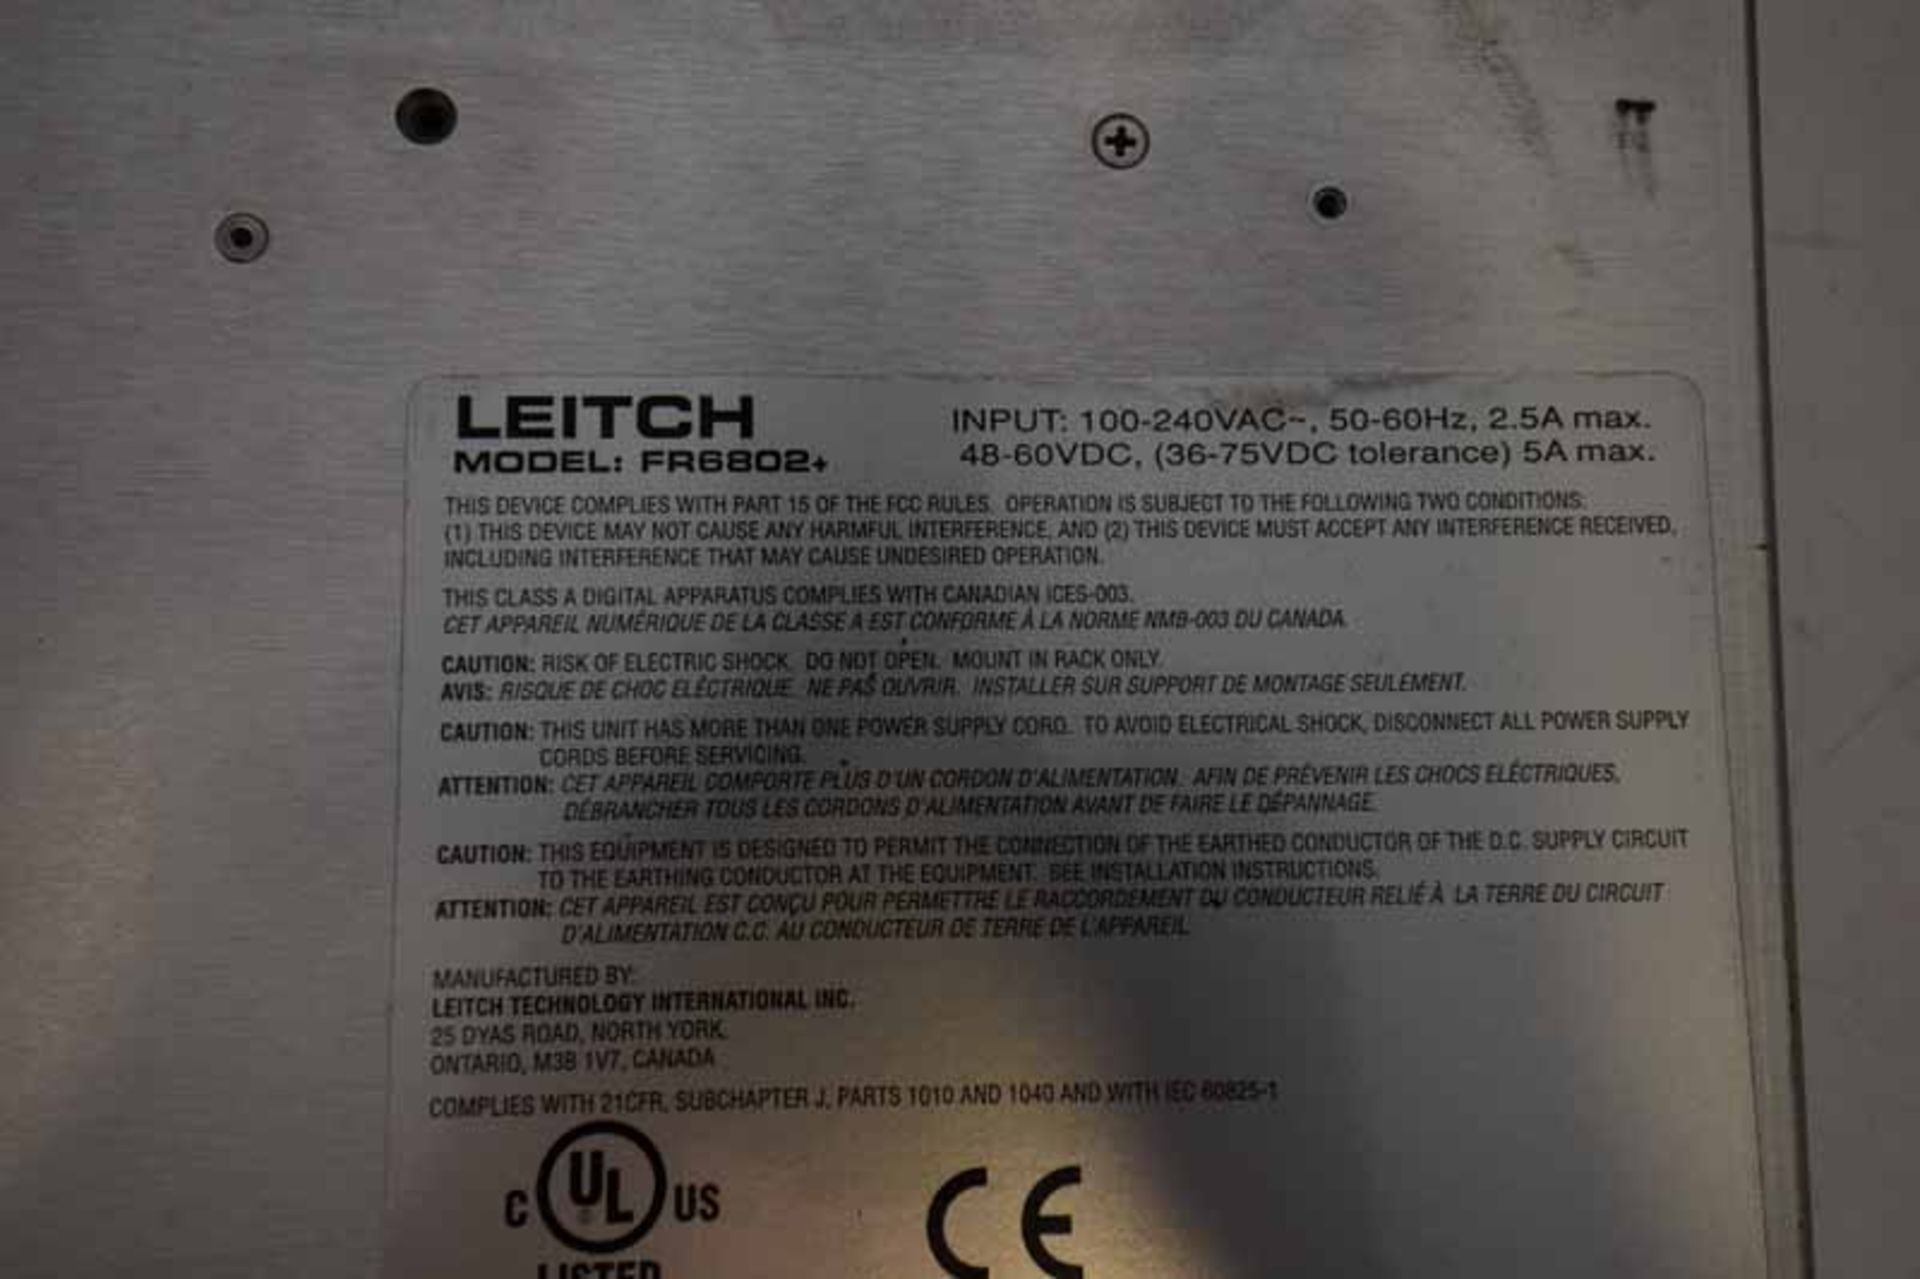 1 - Leitch 6800 Plus - Image 3 of 3